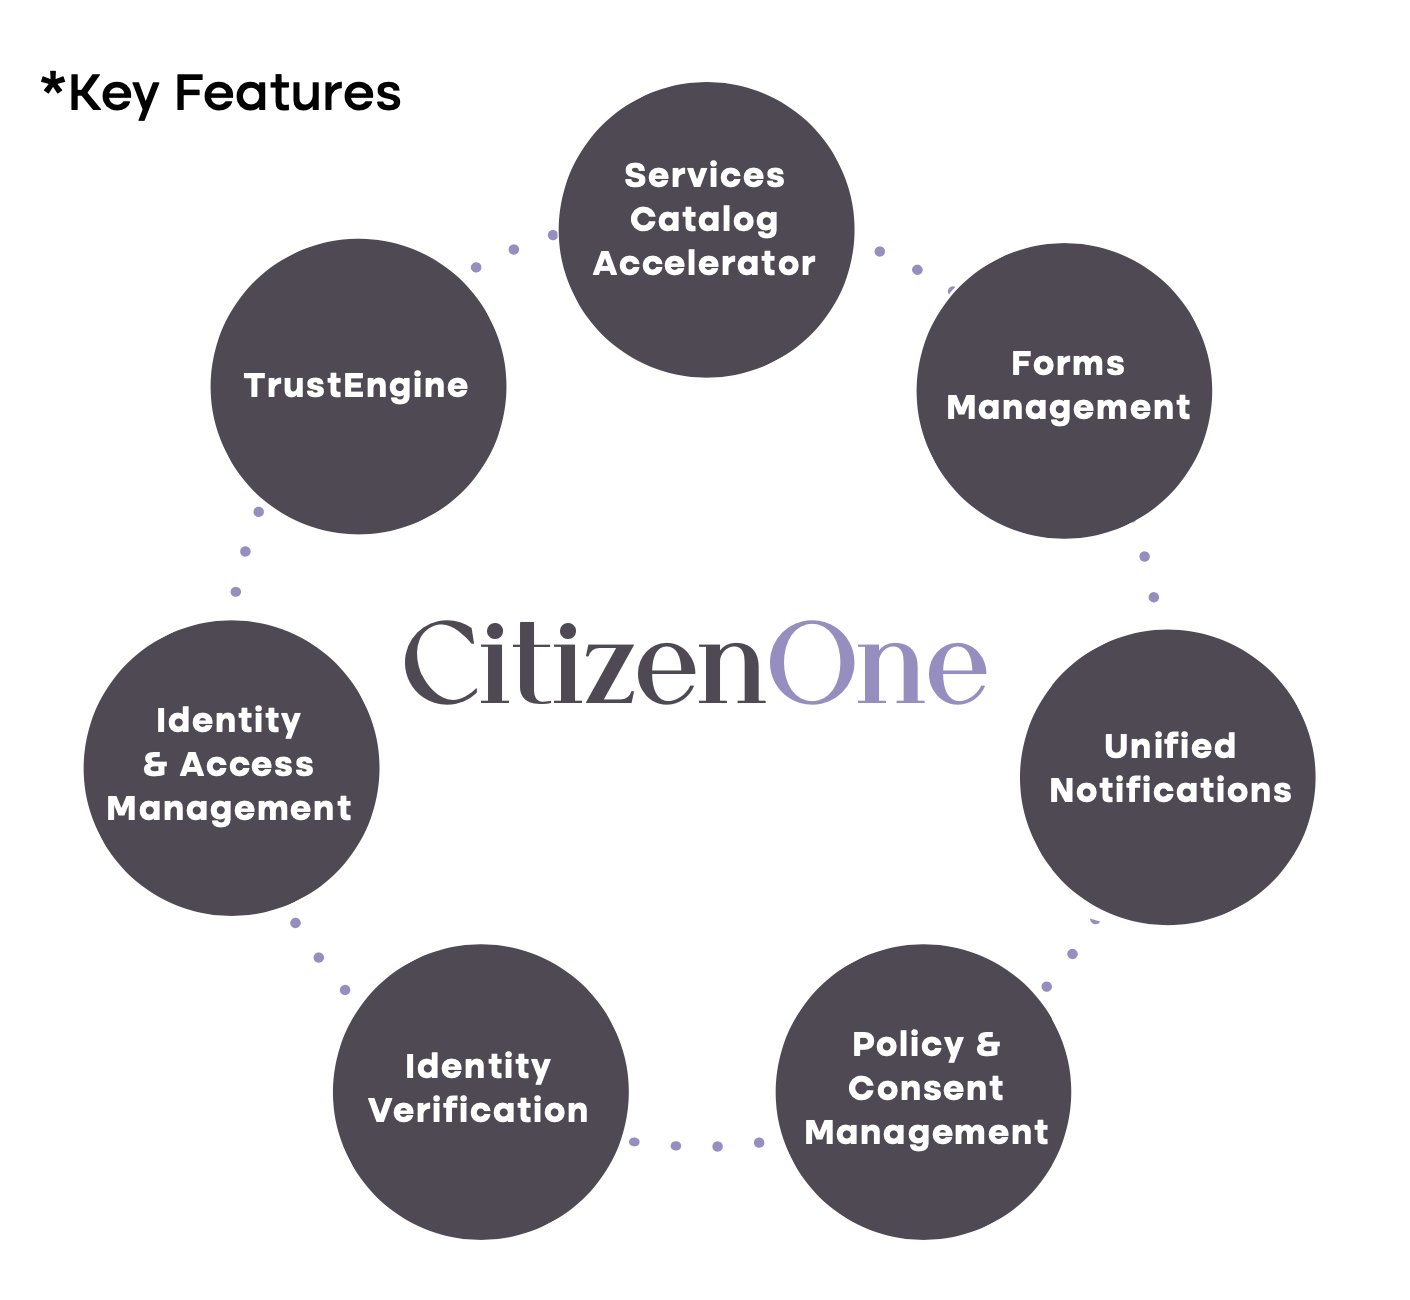 CitizenOne key features image. 